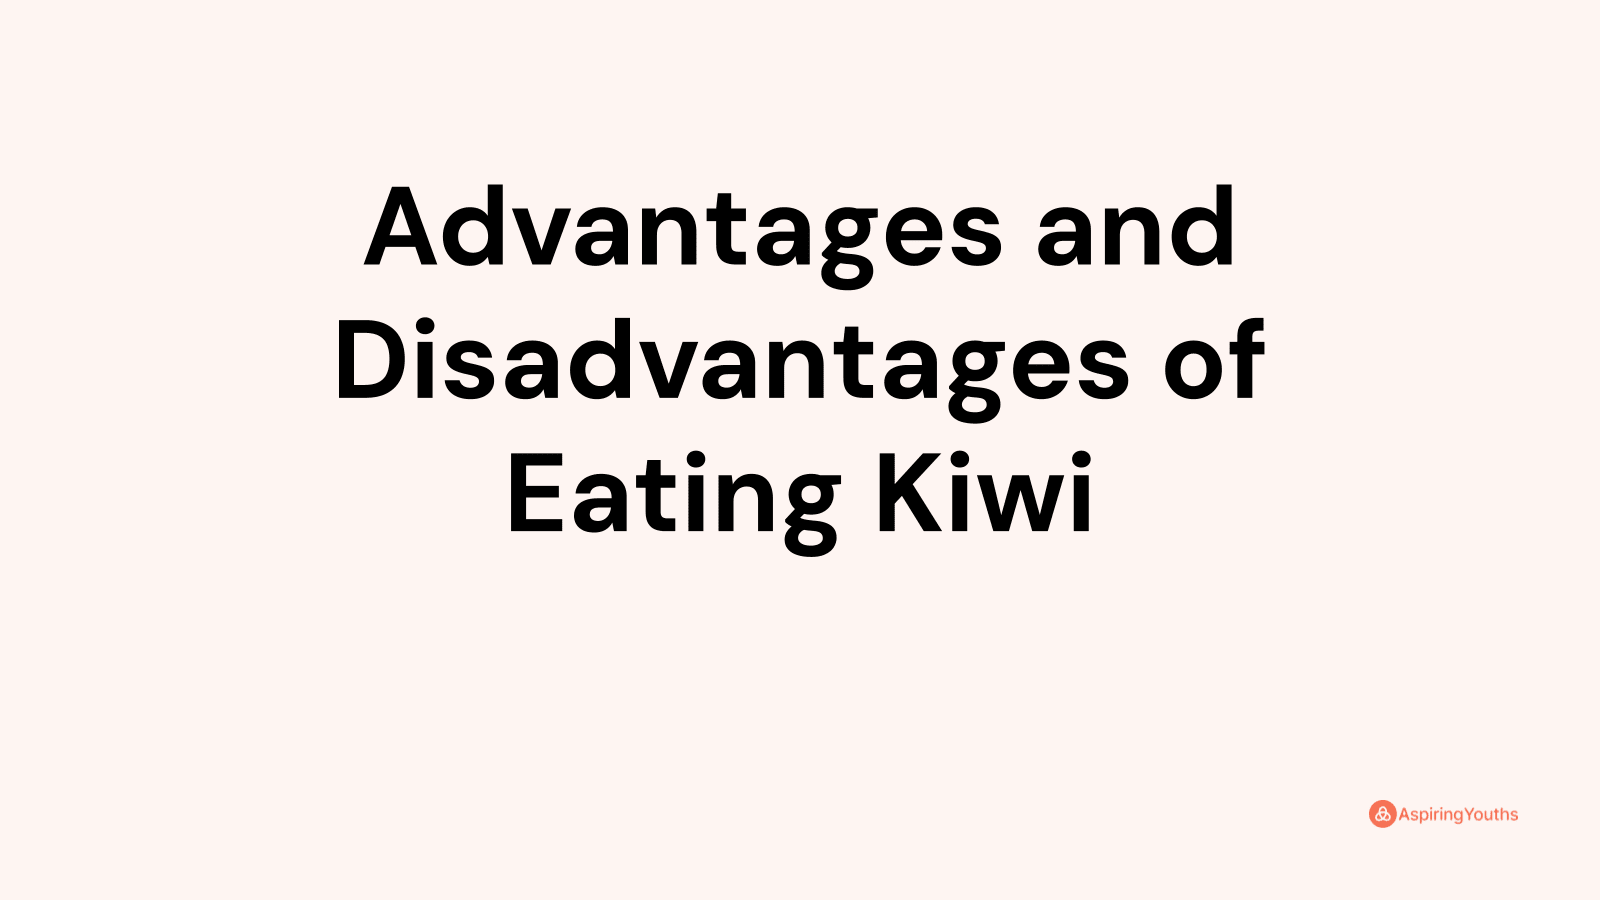 Advantages and disadvantages of Eating Kiwi